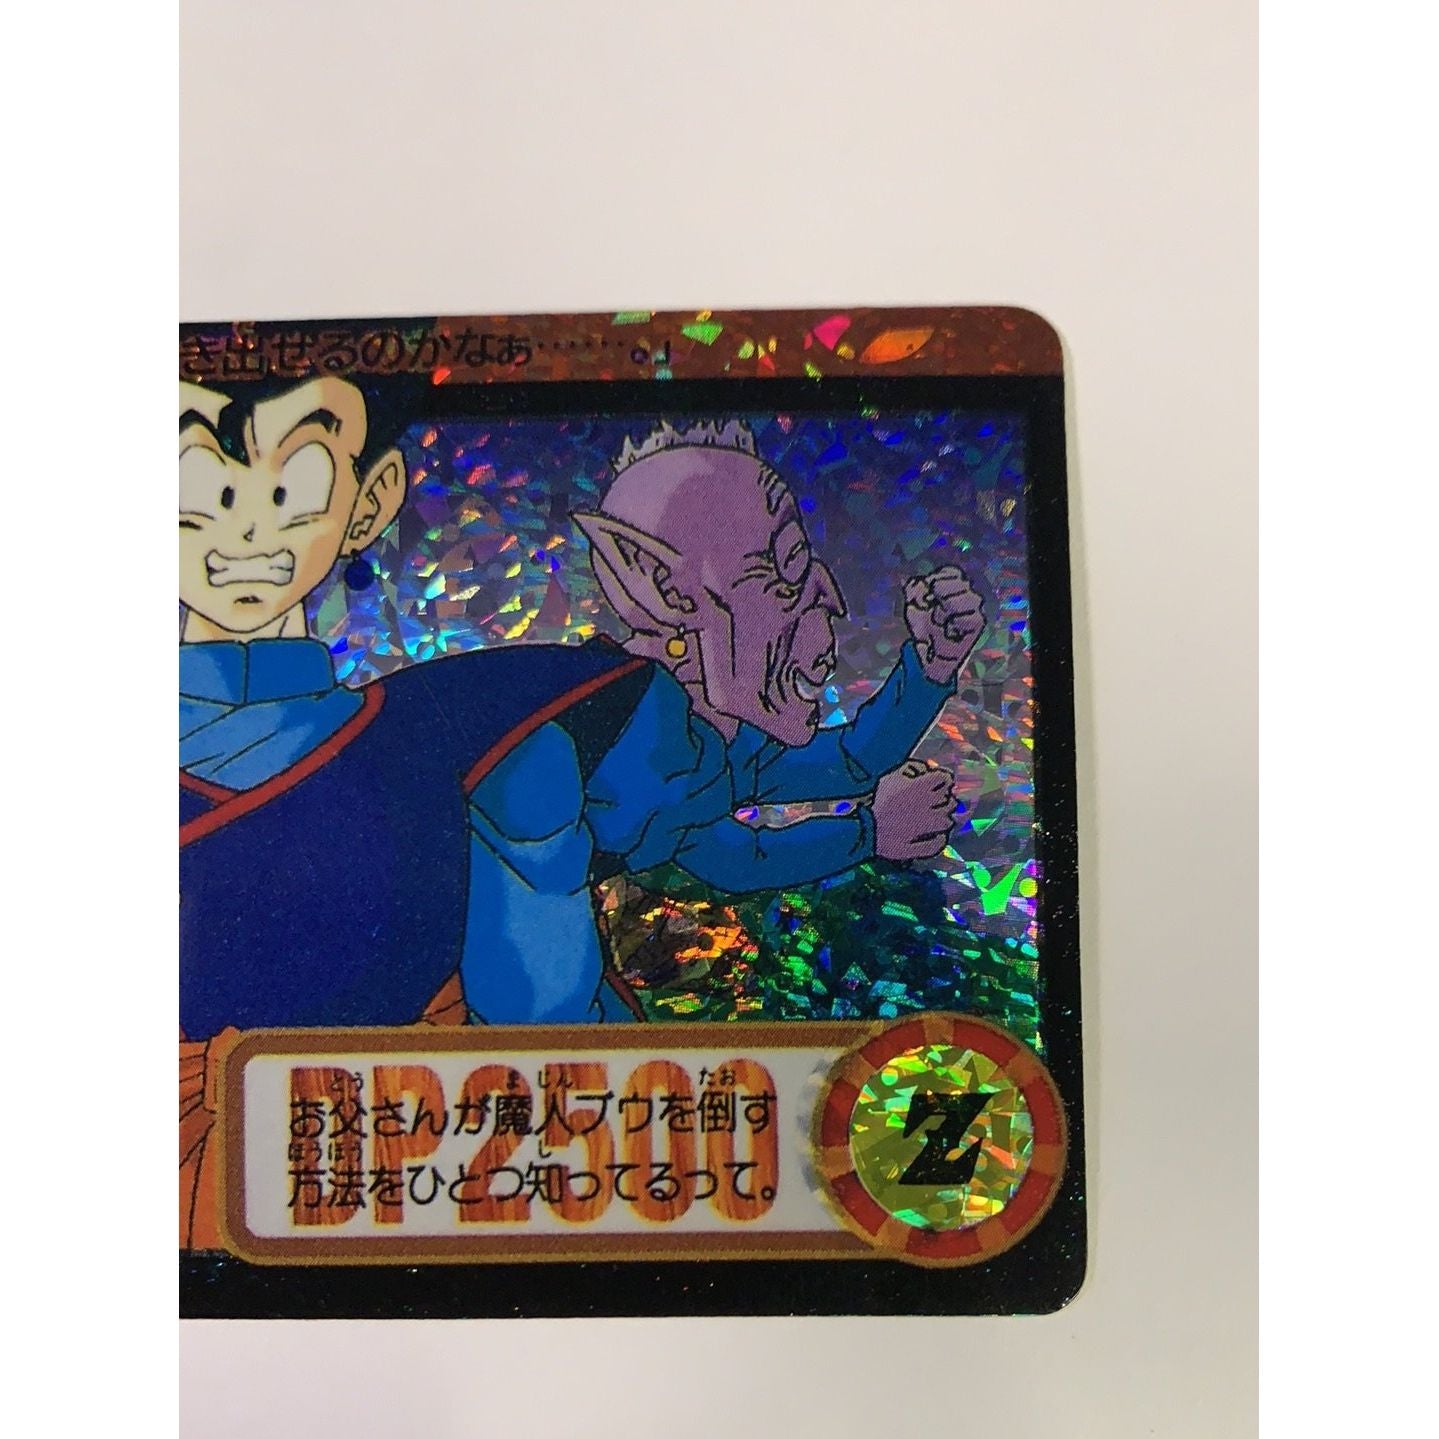  1995 Cardass Hondan Dragon Ball Z #866  Local Legends Cards & Collectibles